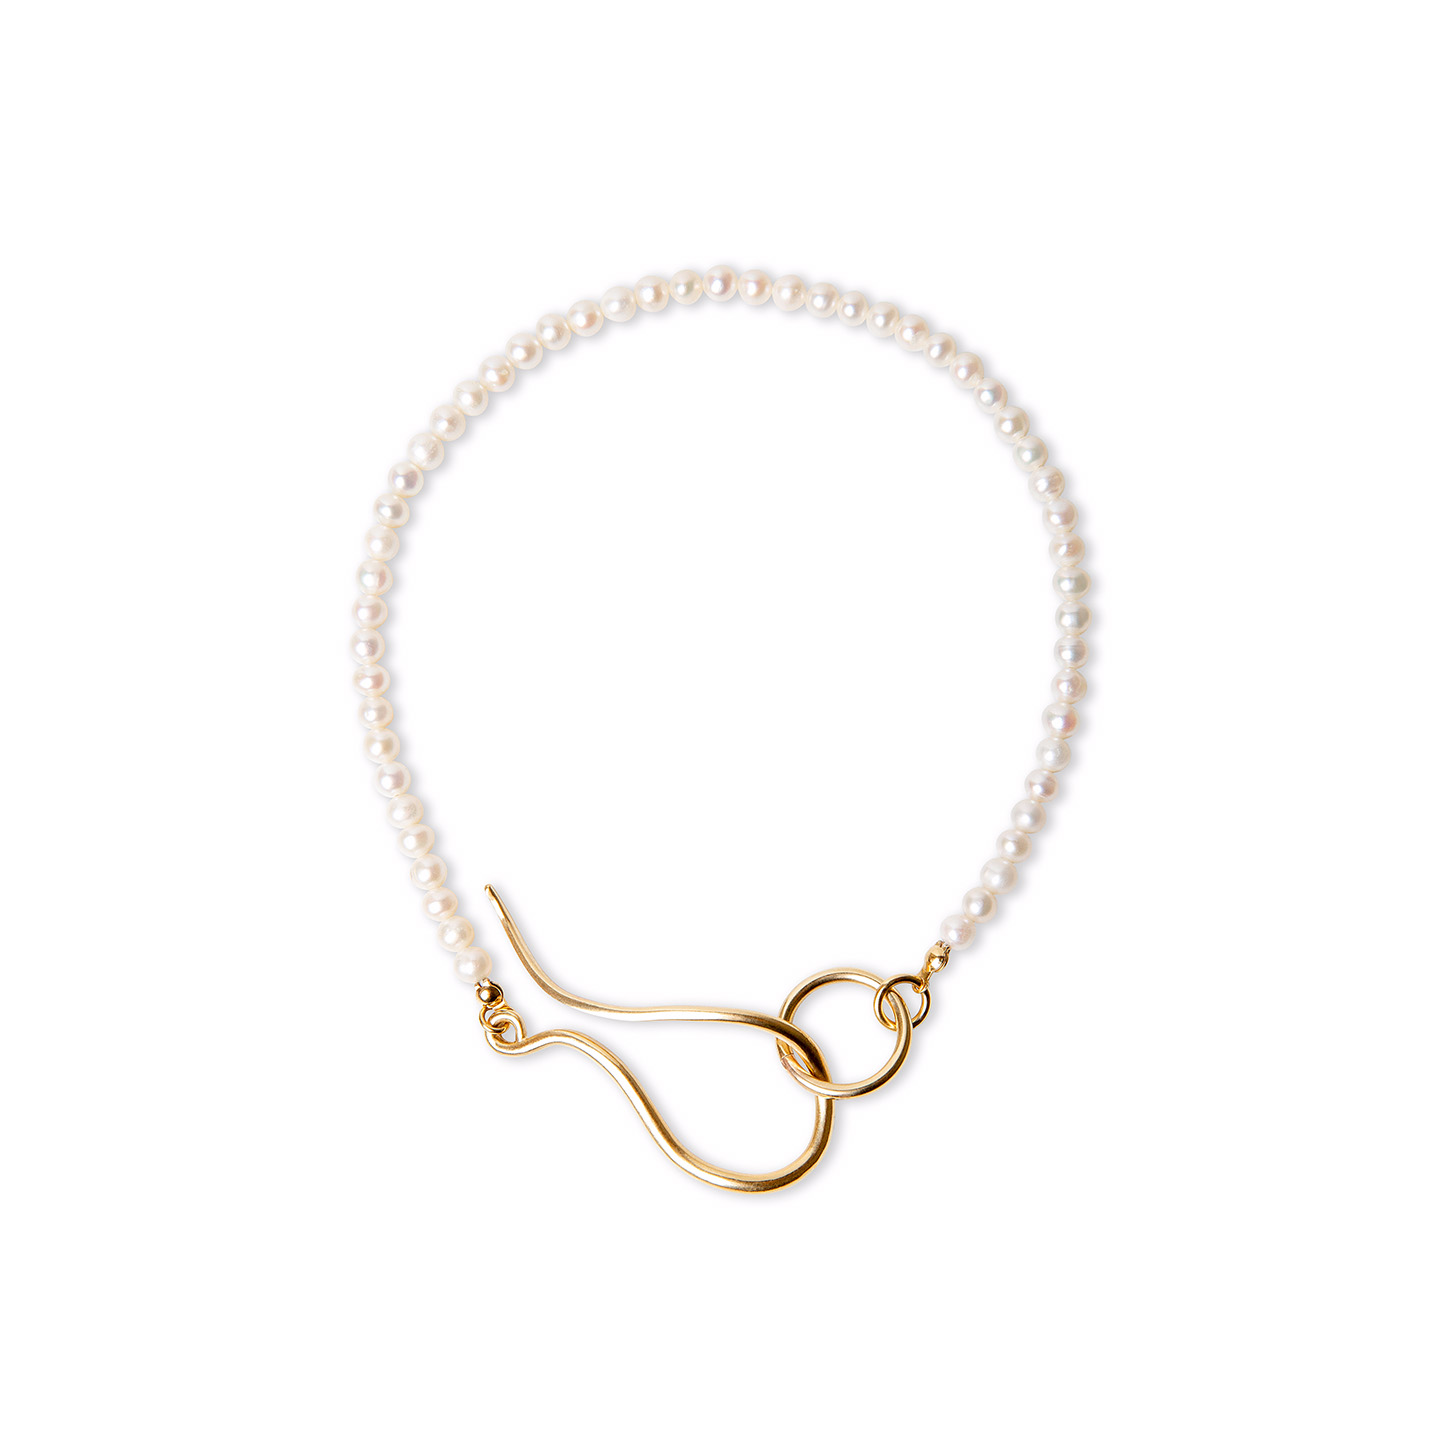 OEM/ODM ジュエリー カスタム真珠と金メッキのシルバー ショート ネックレス ewelry メーカー